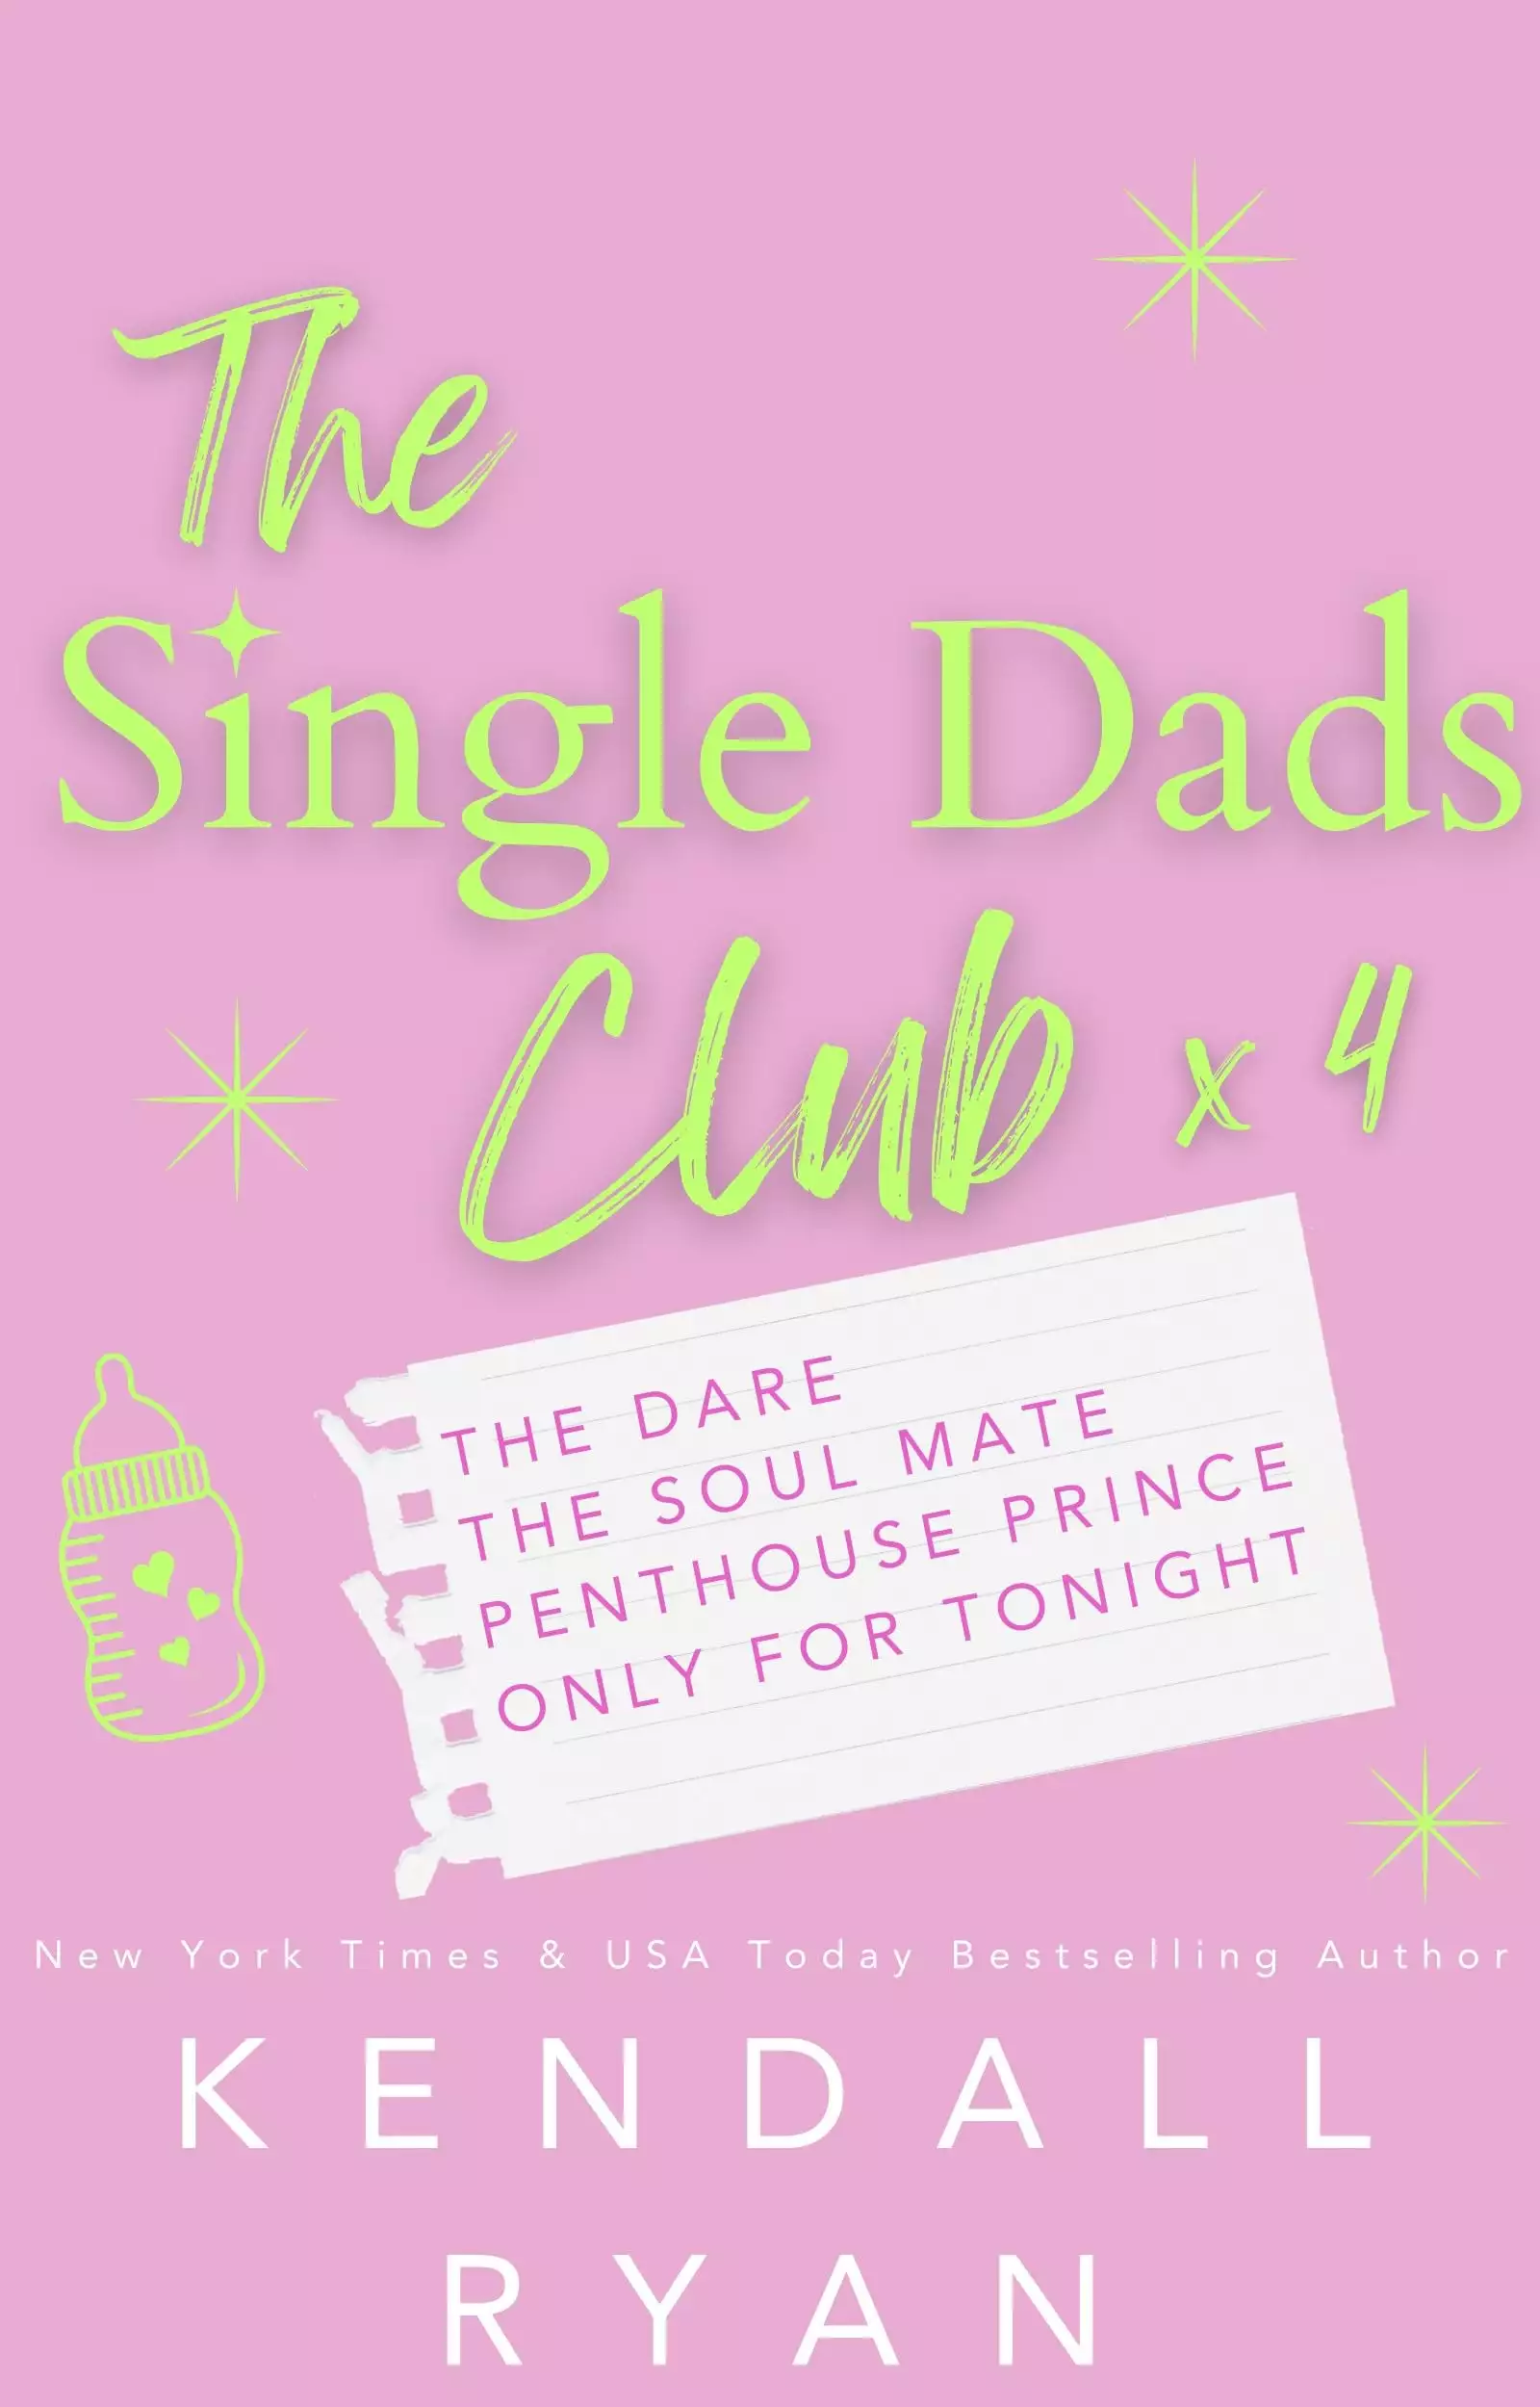 The Single Dads Club